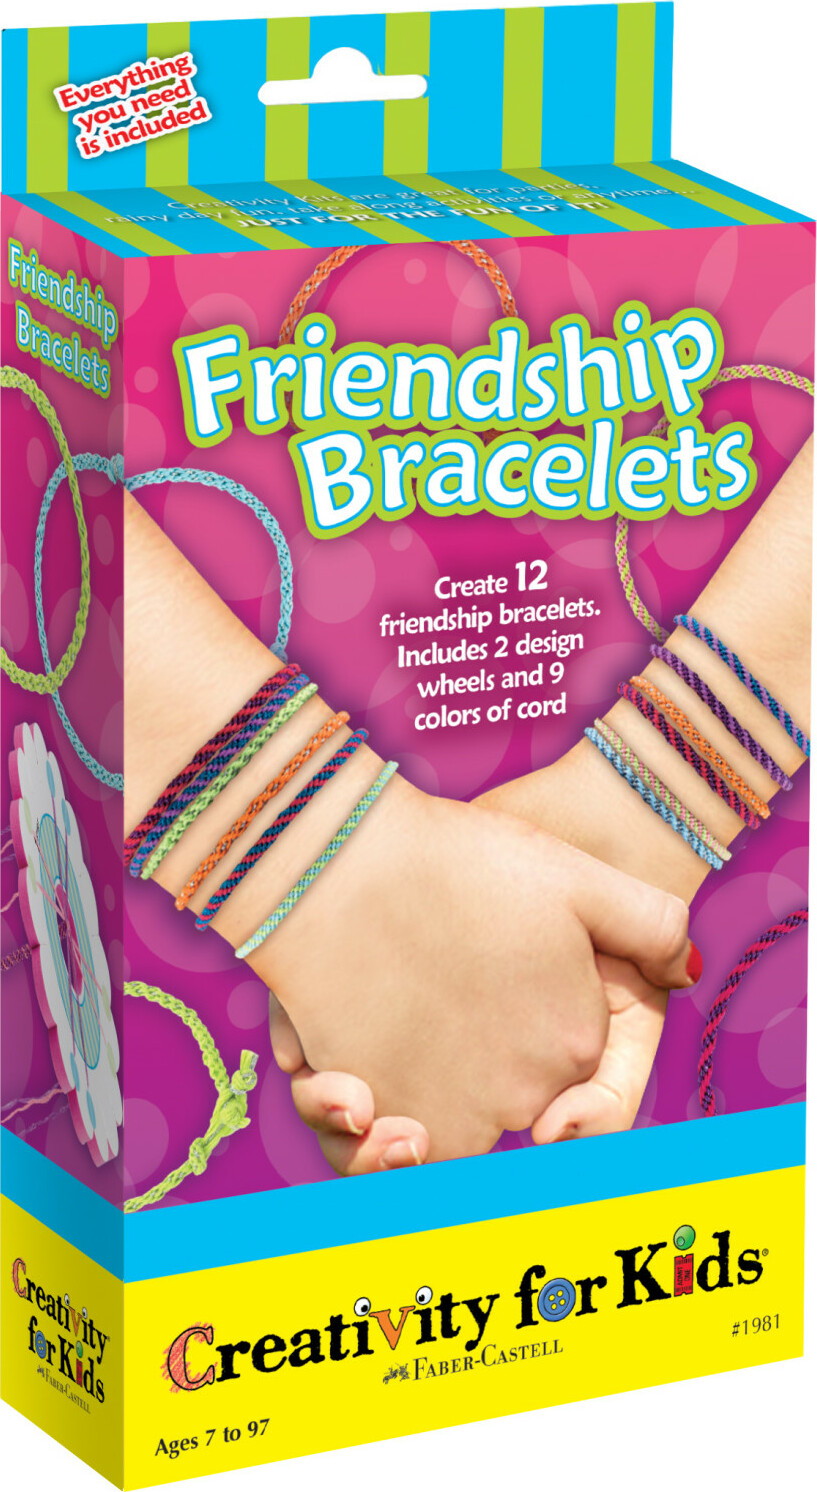 Make these Beaded Friendship Bracelets; Easy Handmade Jewelry For Girls